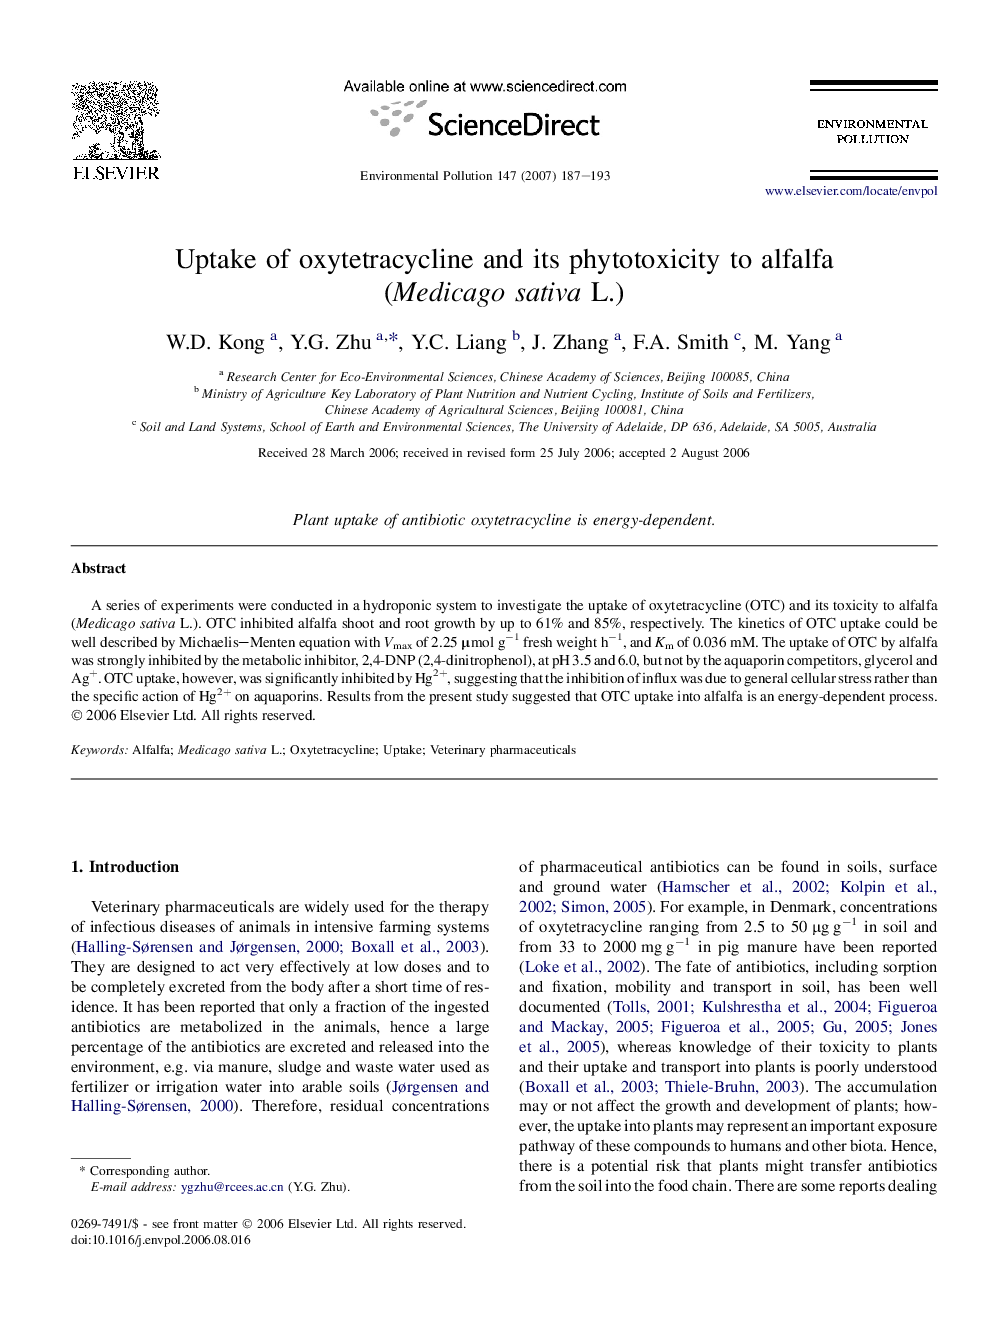 Uptake of oxytetracycline and its phytotoxicity to alfalfa (Medicago sativa L.)